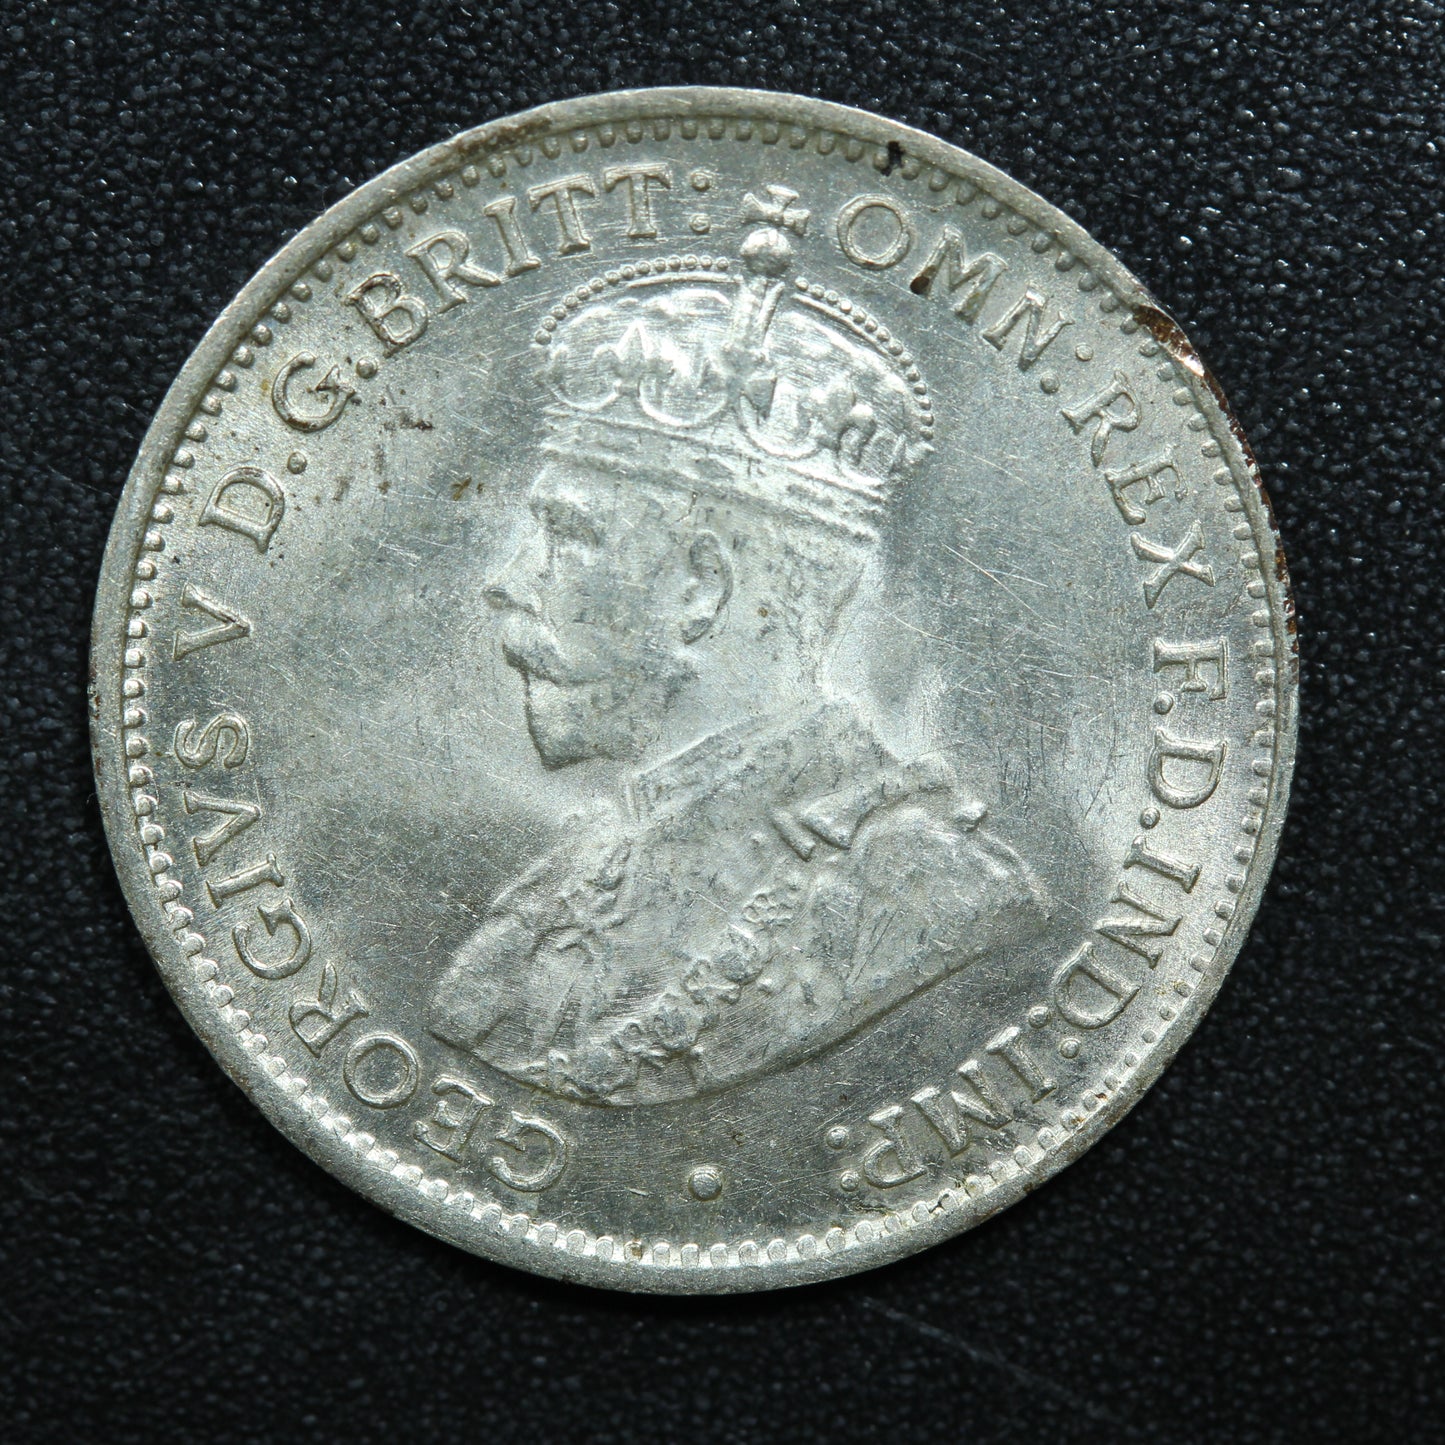 1936 Australian 3 Three Pence Silver Coin - KM# 24